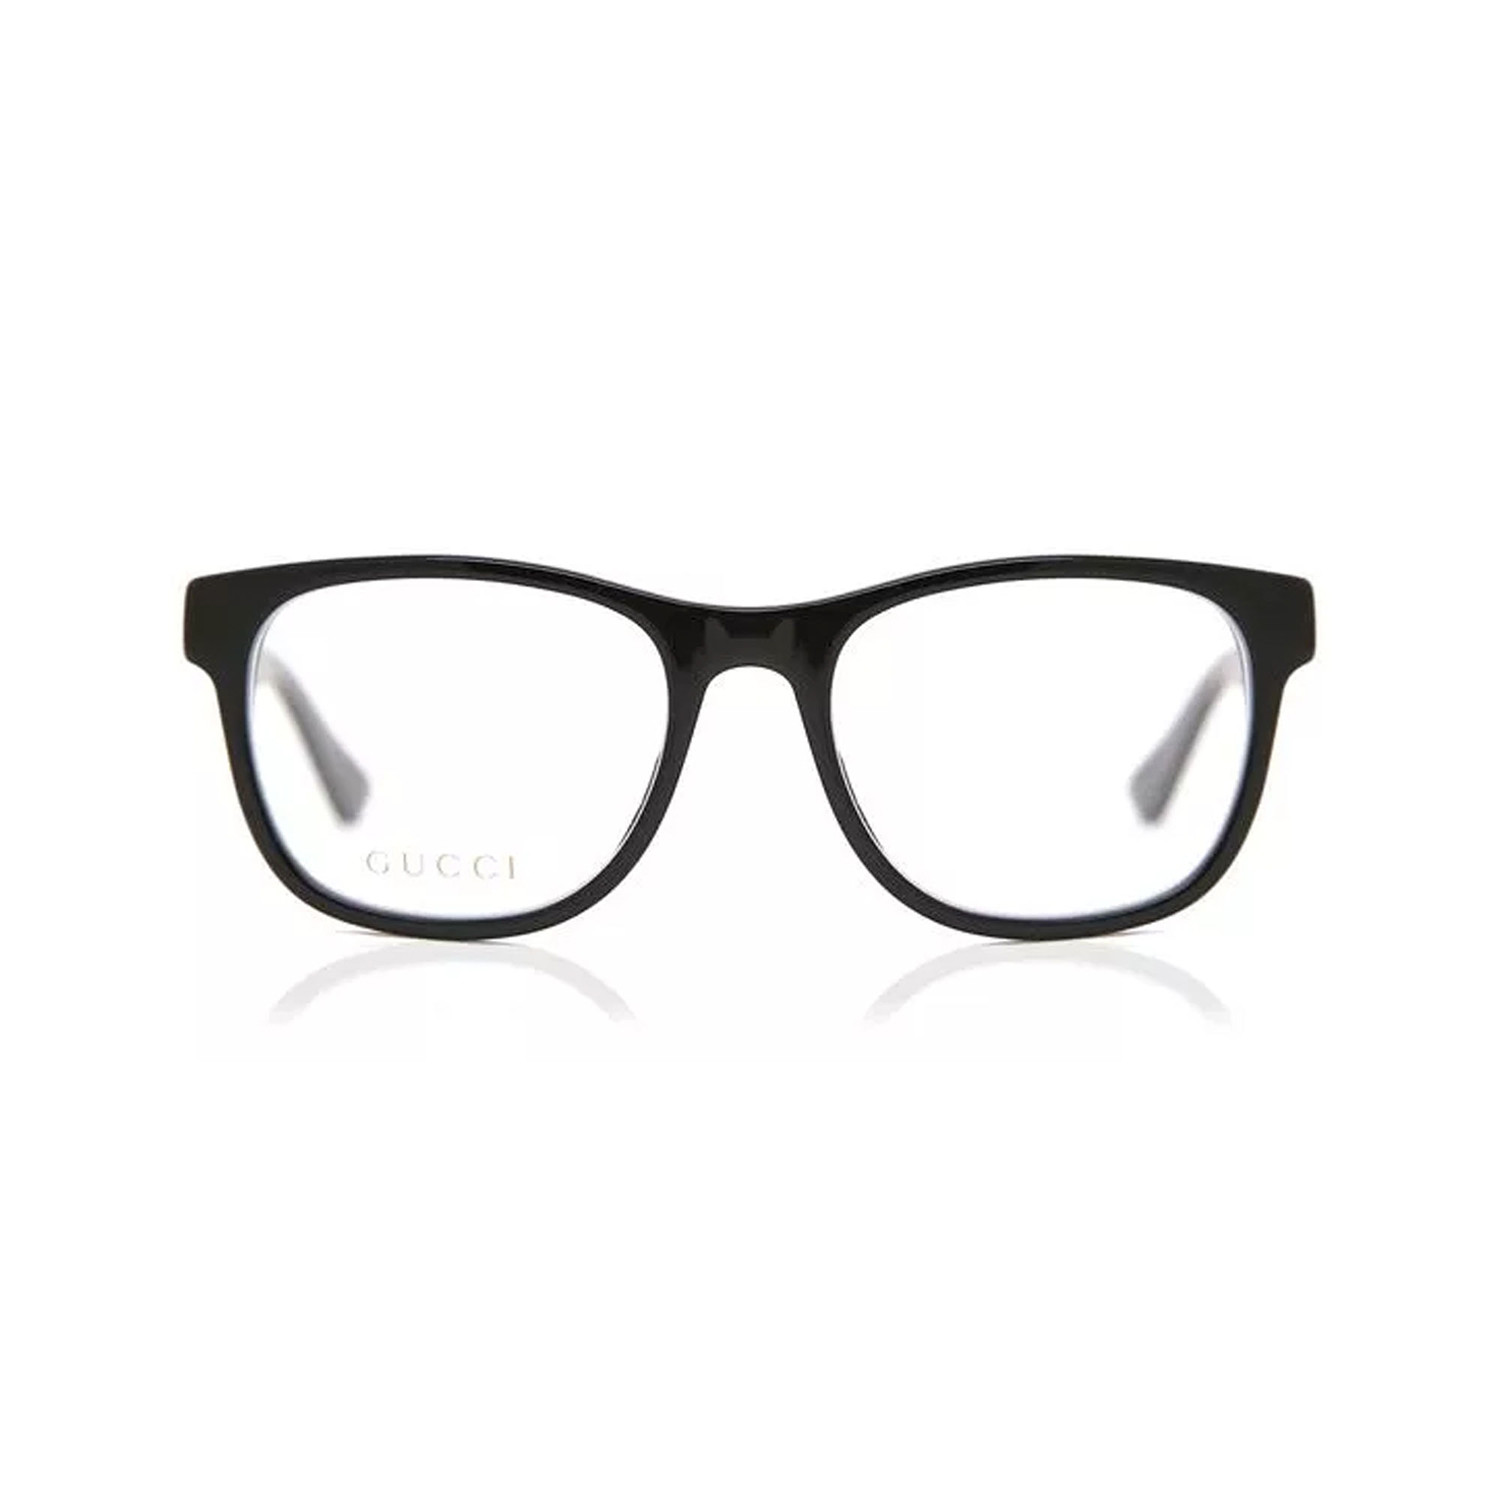 Gucci // Men's Optical Frames // Black - Designer Eyewear - Touch of Modern